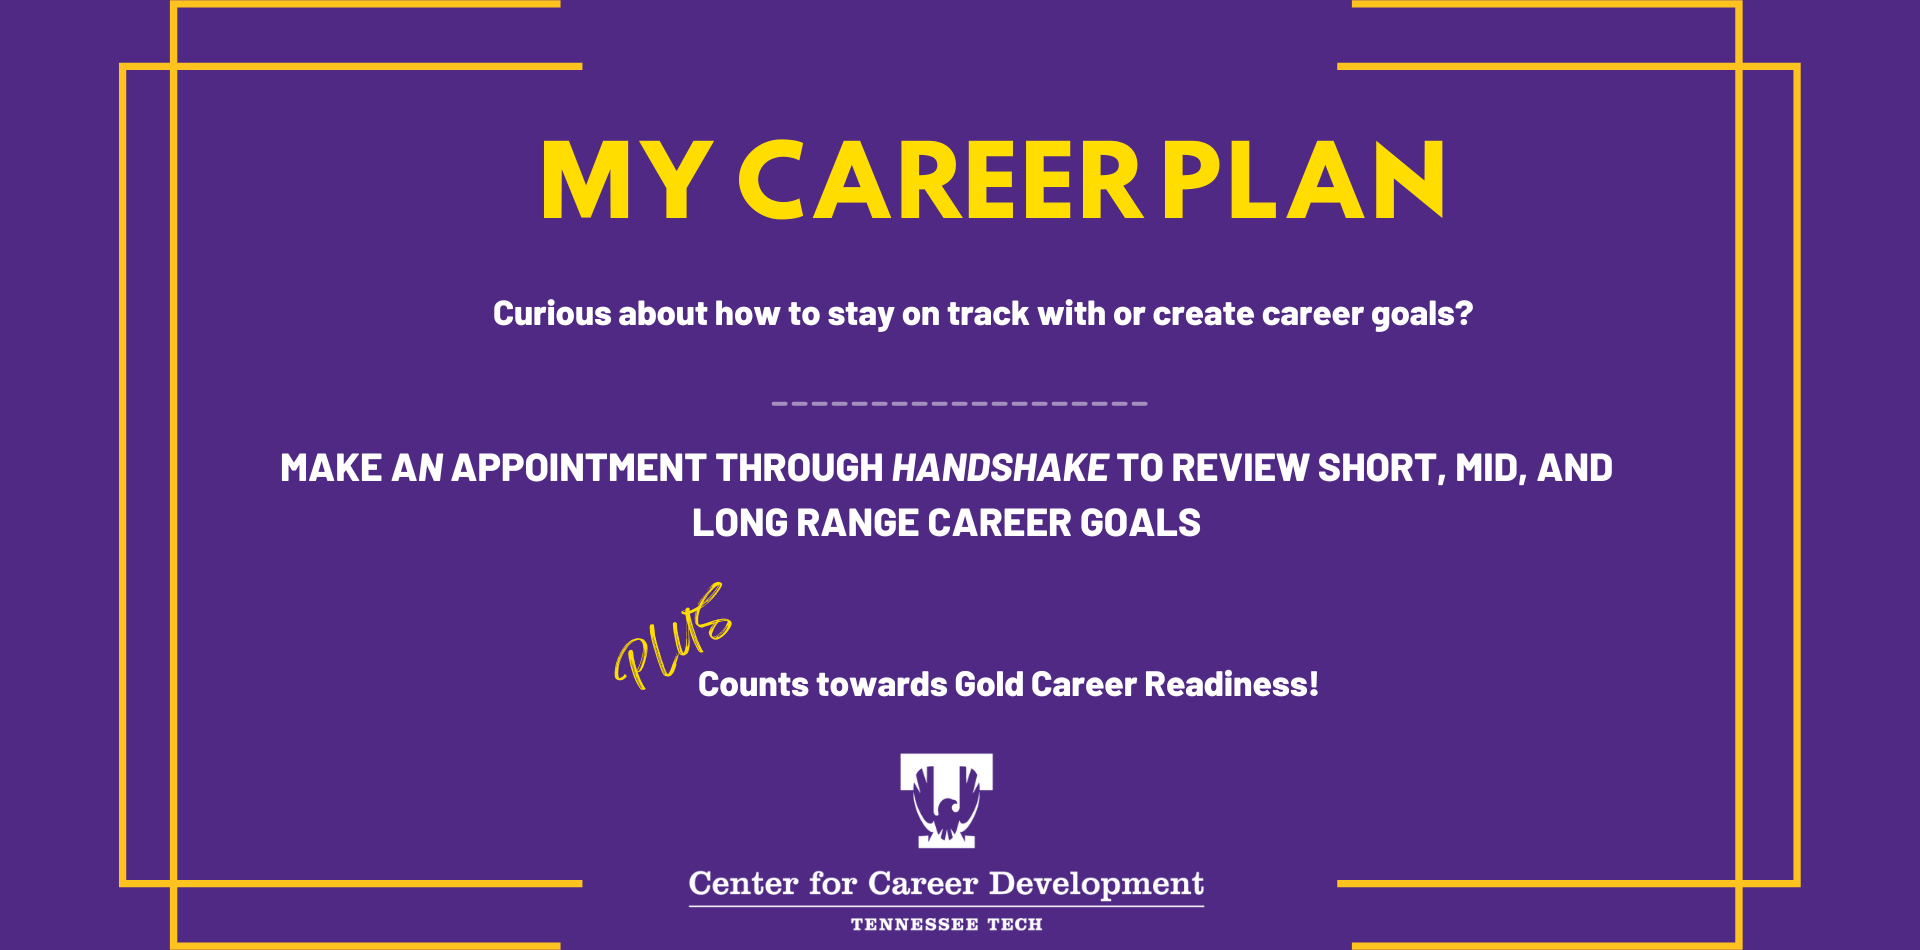 My Career Plan: Make an appt through handshake to review short, mid, and long range career goals